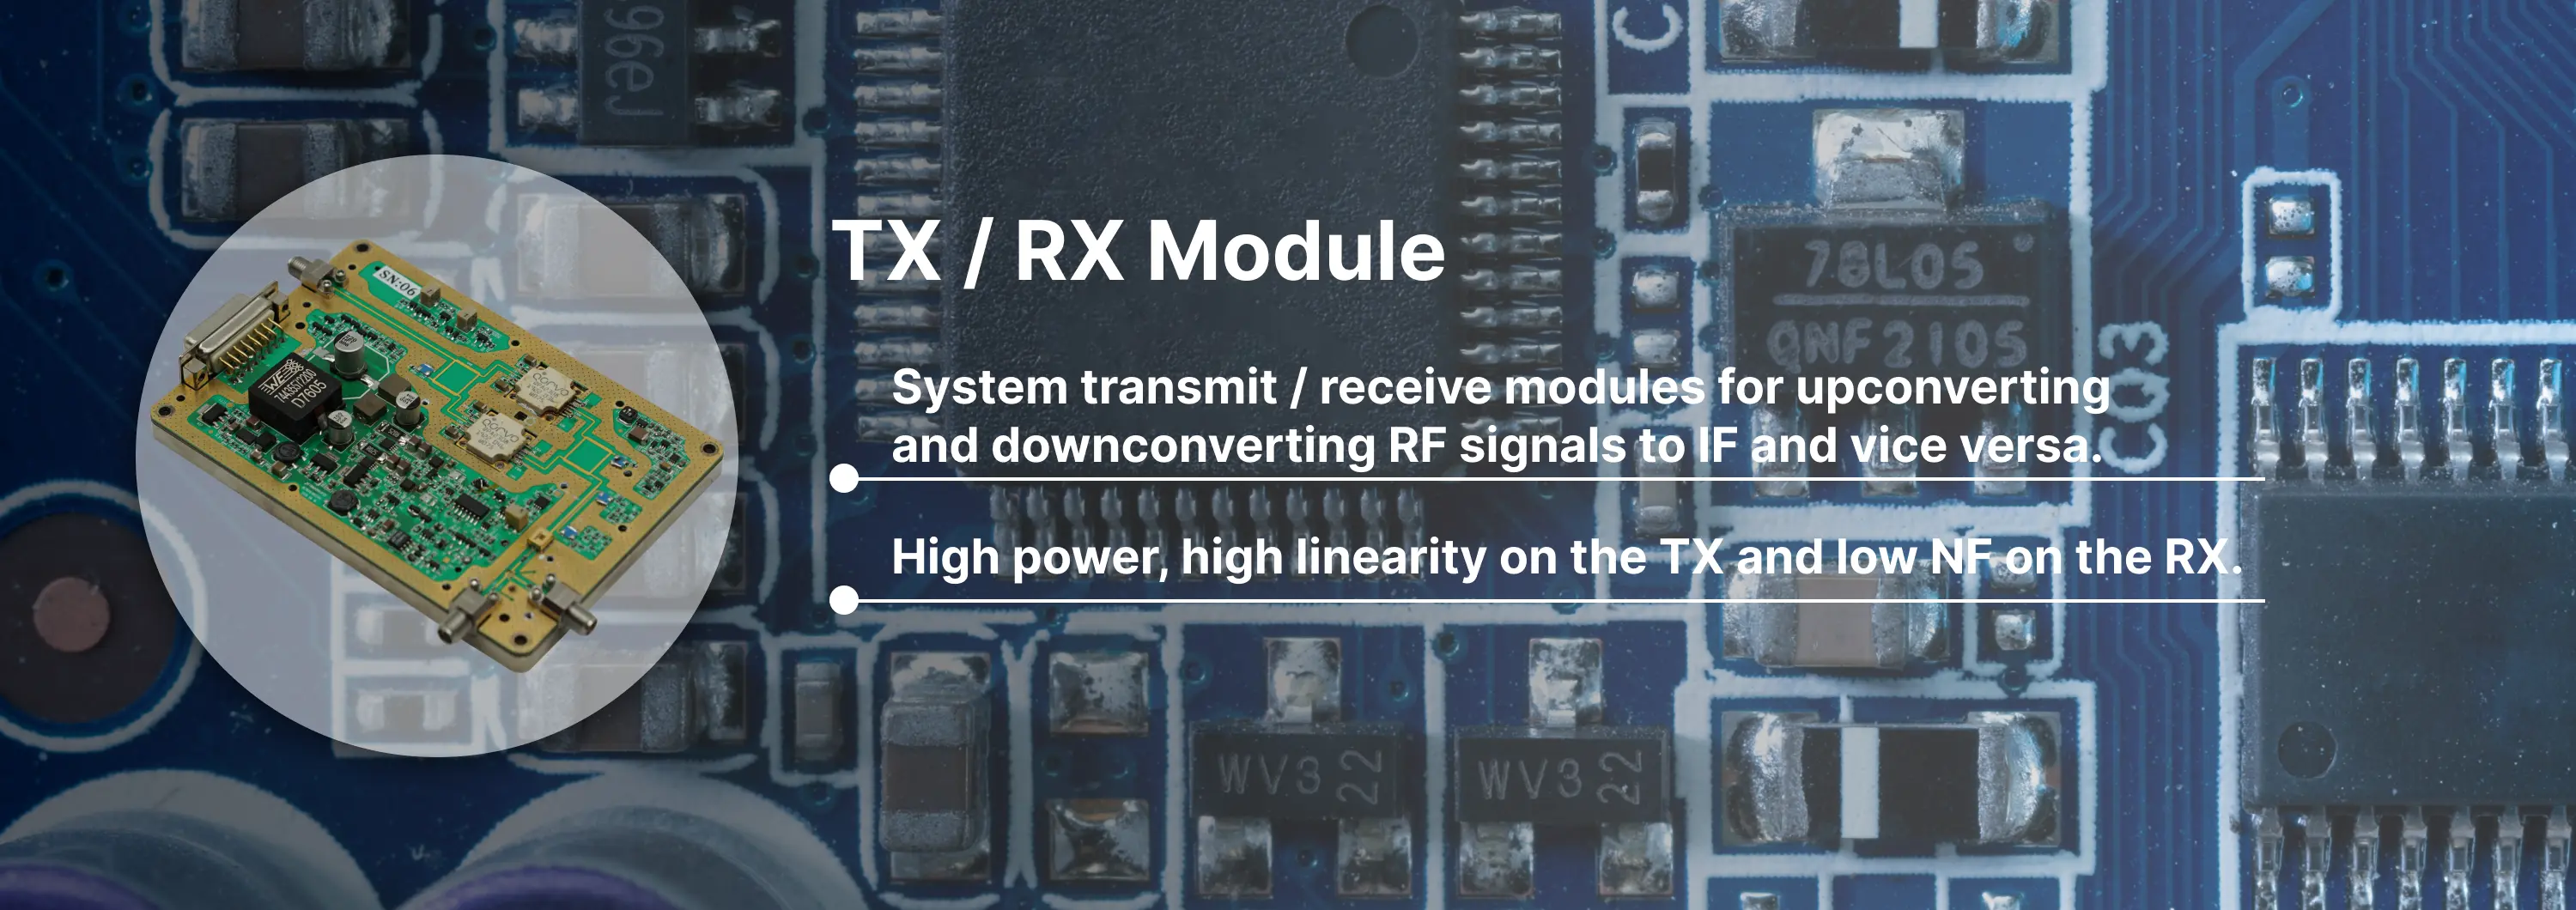 TX / RX Module Banner